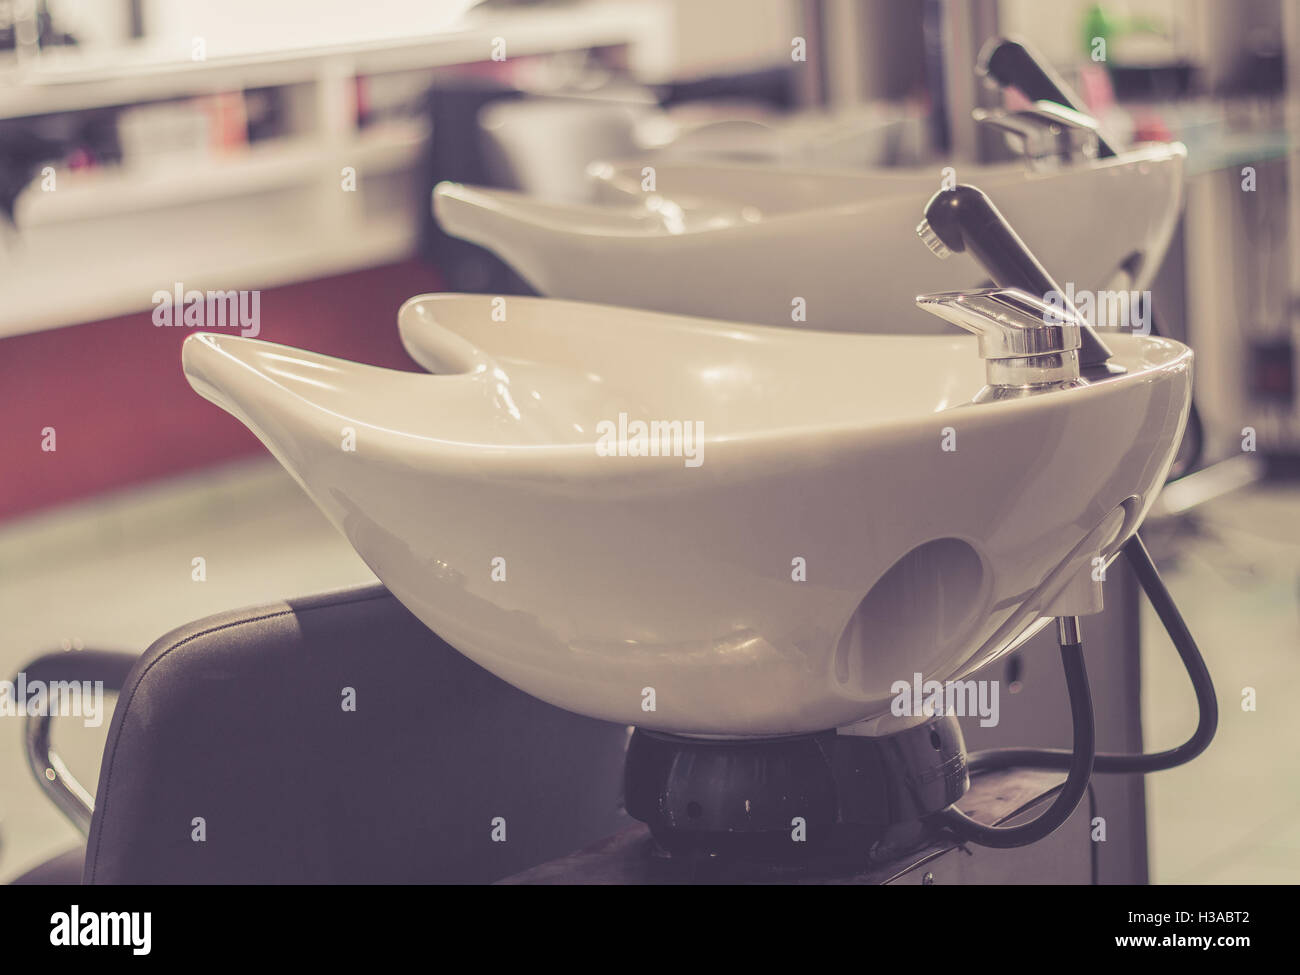 Beauty salon interior - a row of hair washing sinks - white washbasins for hairdresser Stock Photo